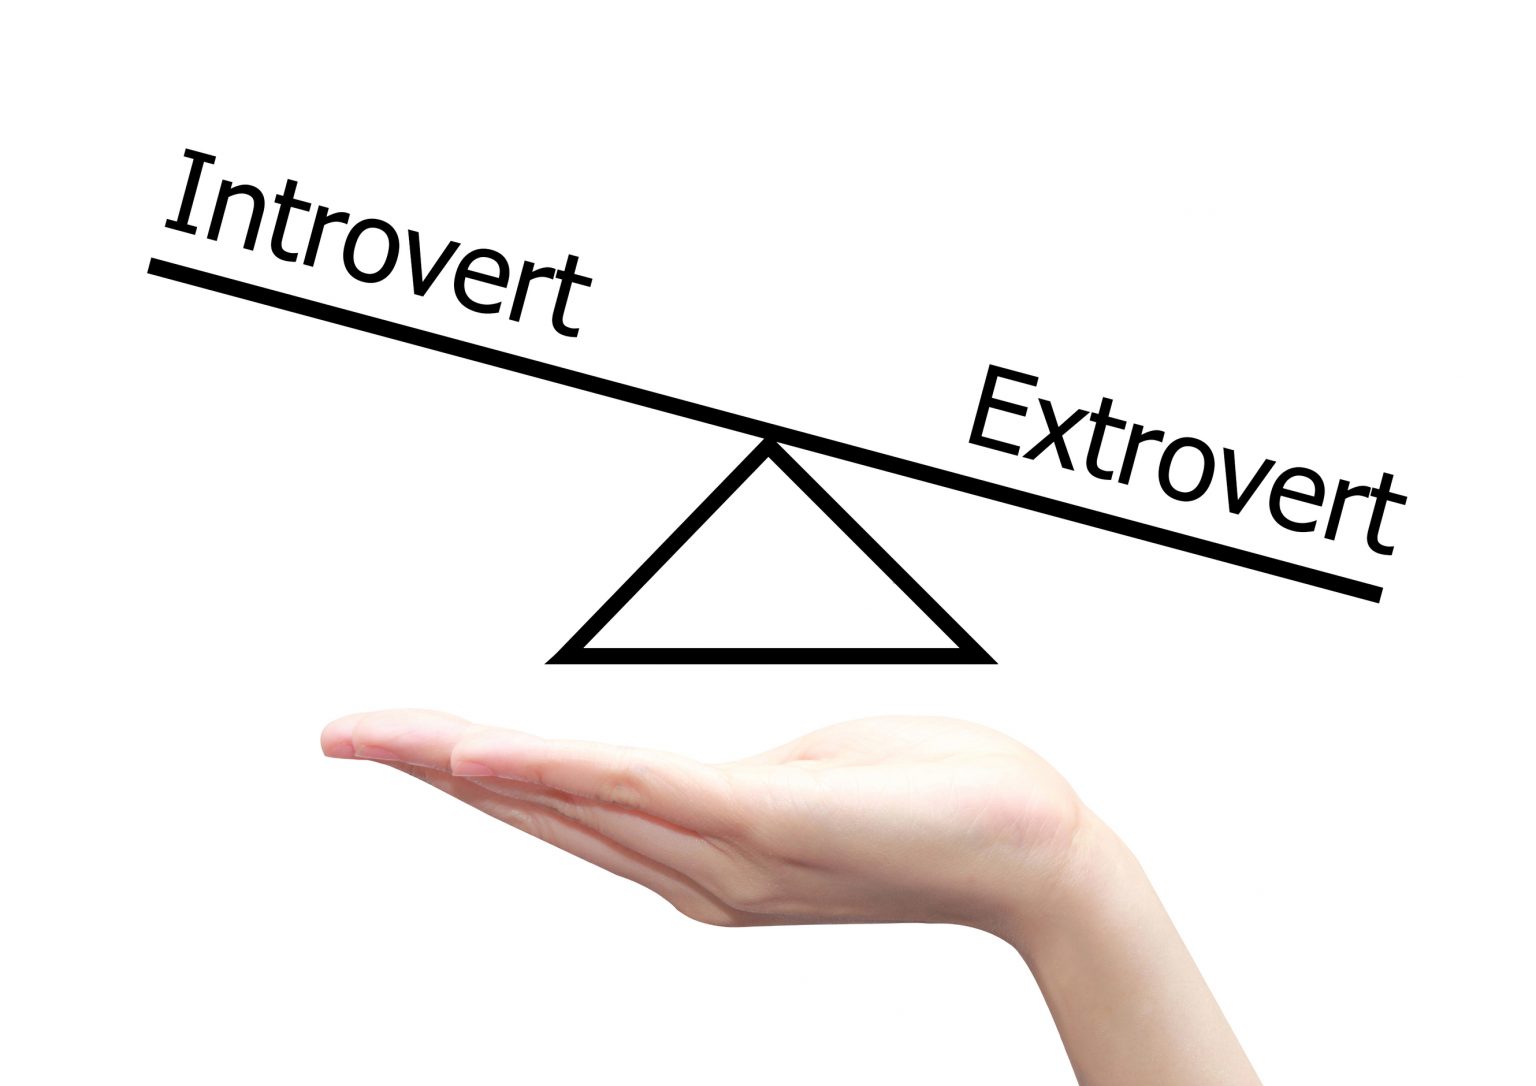 Introvert - extroverts